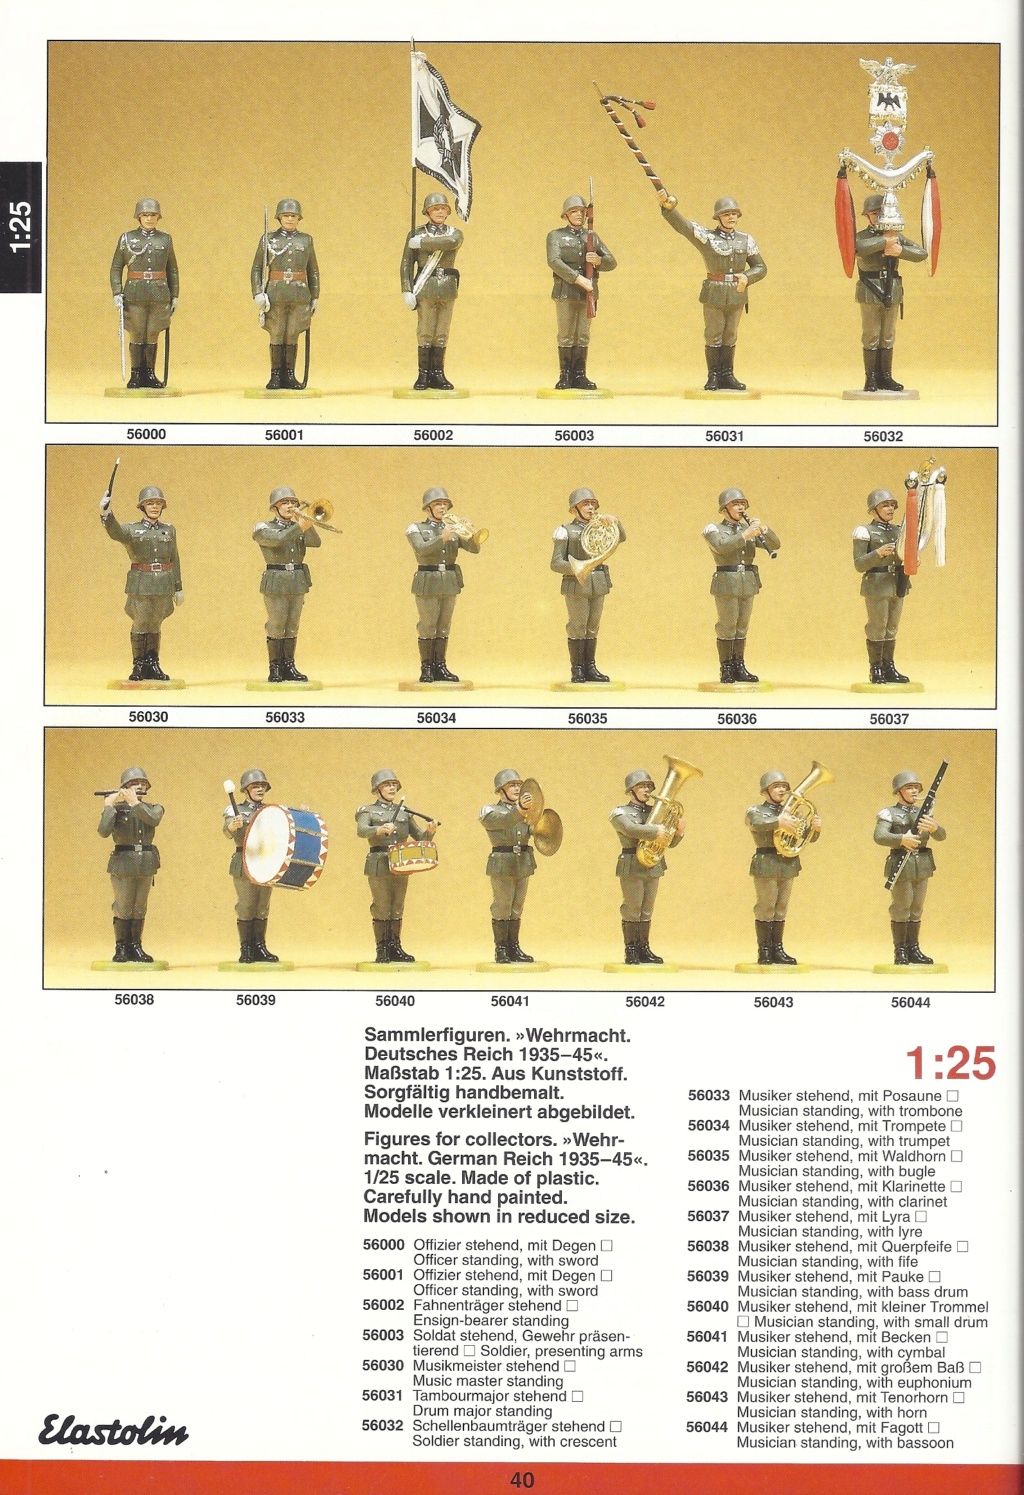 [PREISER 1996] Catalogue elastolin 1996 Preis183